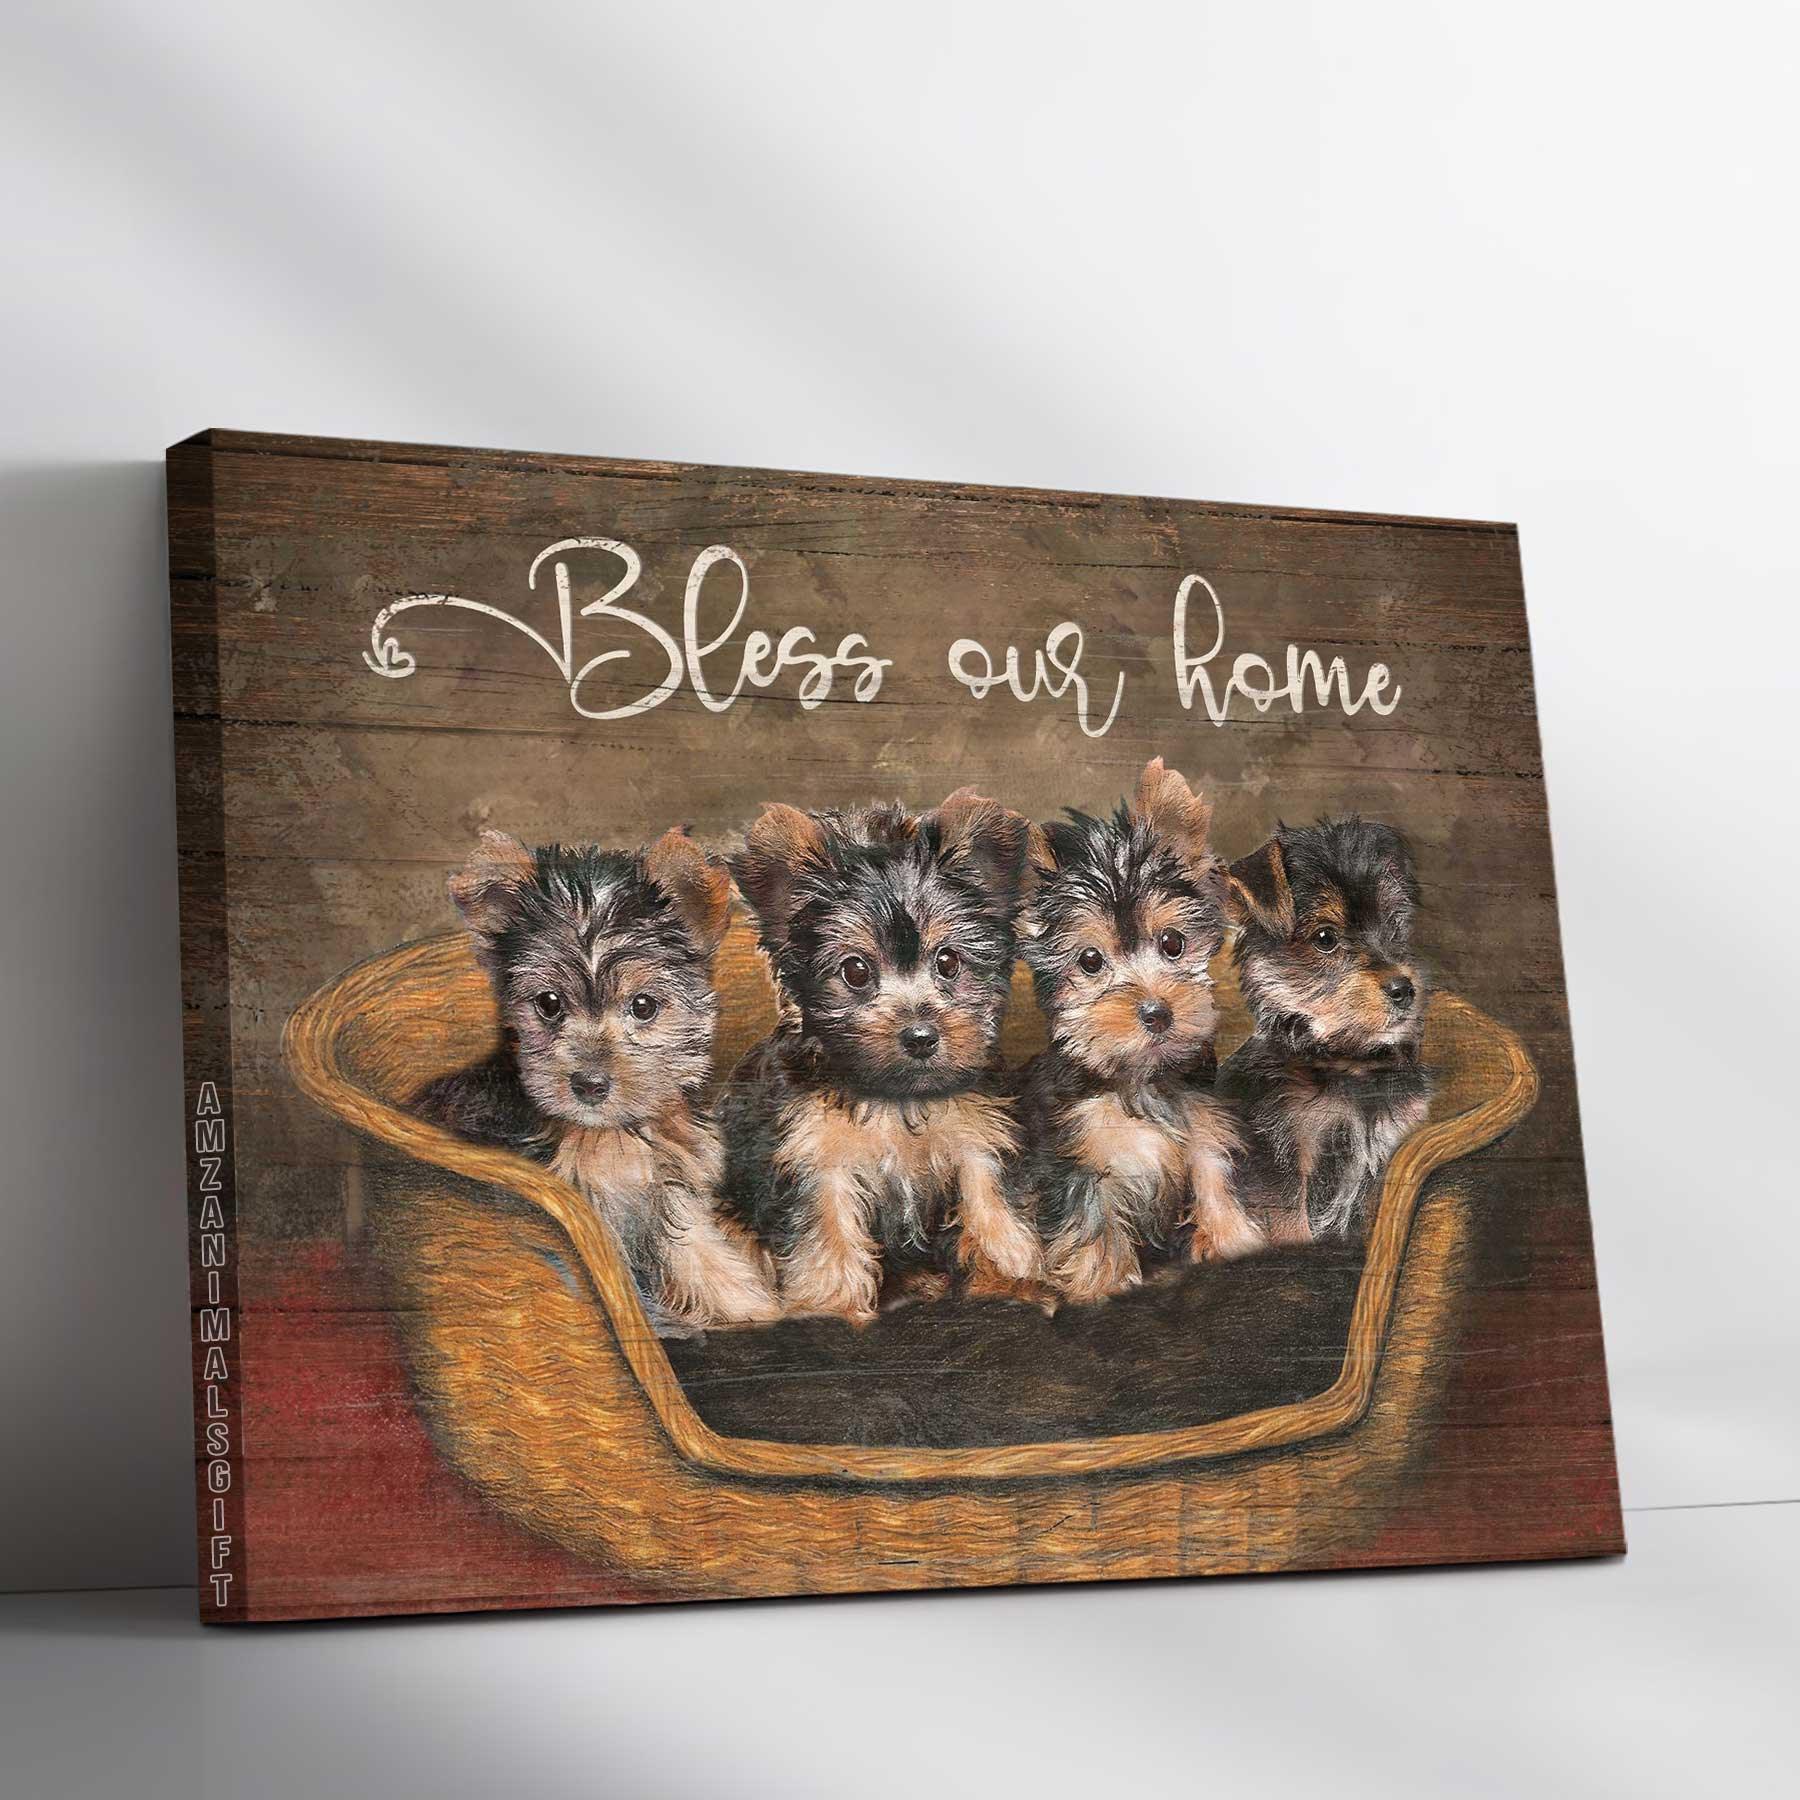 Yorkshire Terrier Landscape Premium Wrapped Canvas- Little Yorkshire Terriers Canvas- Bless Our Home Dogs Landscape Canvas Prints - Gift For Dog Lover - Amzanimalsgift